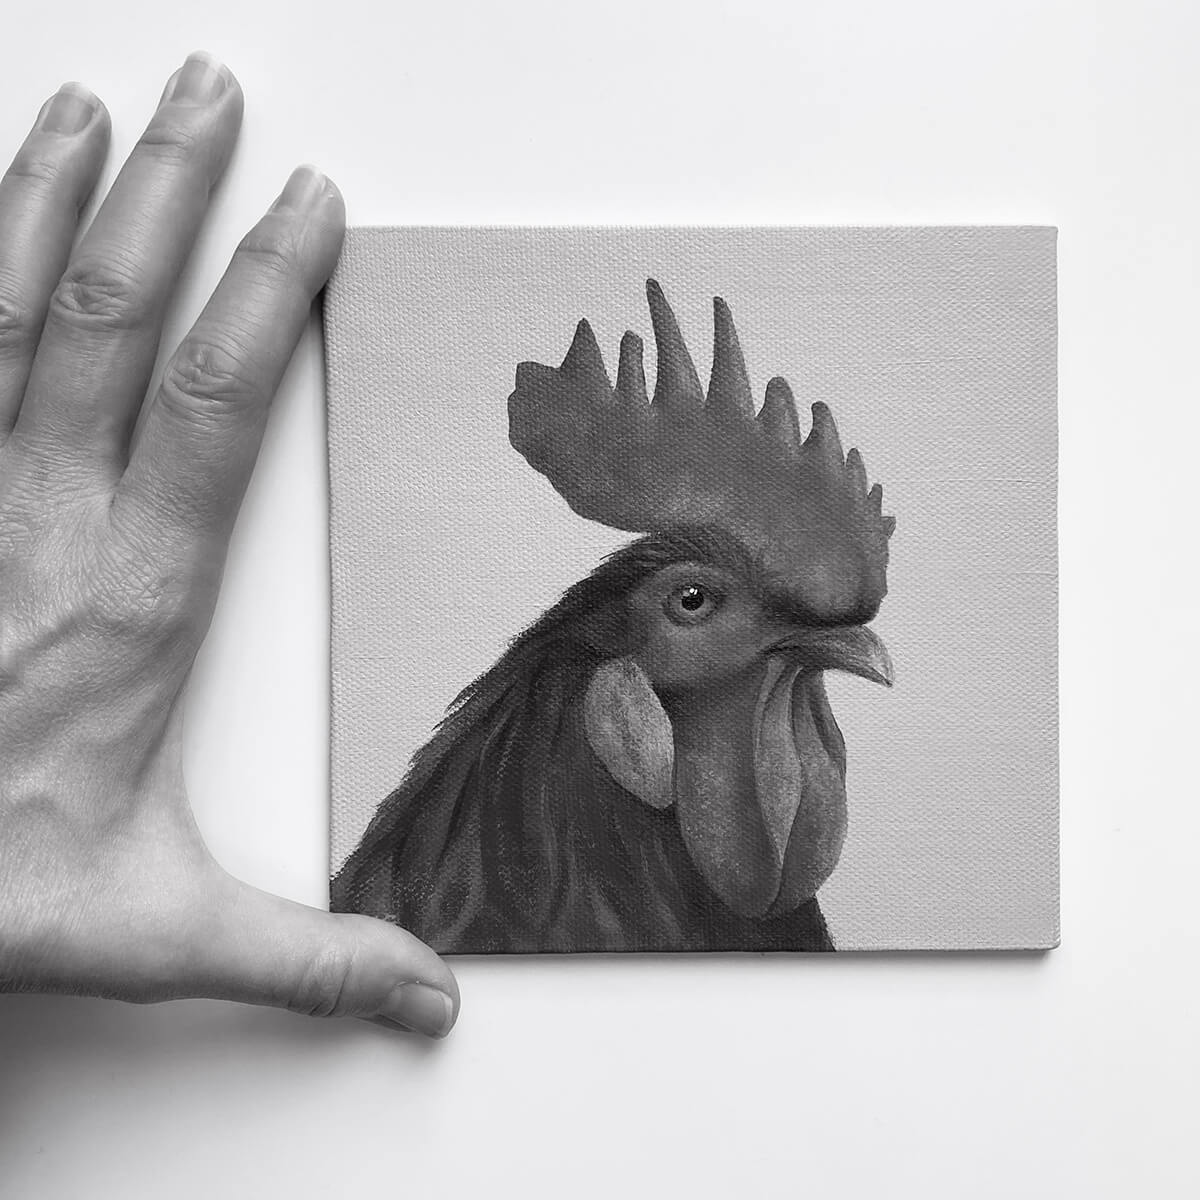 Original small acrylic painting of a cockerel by Amanda Gosse